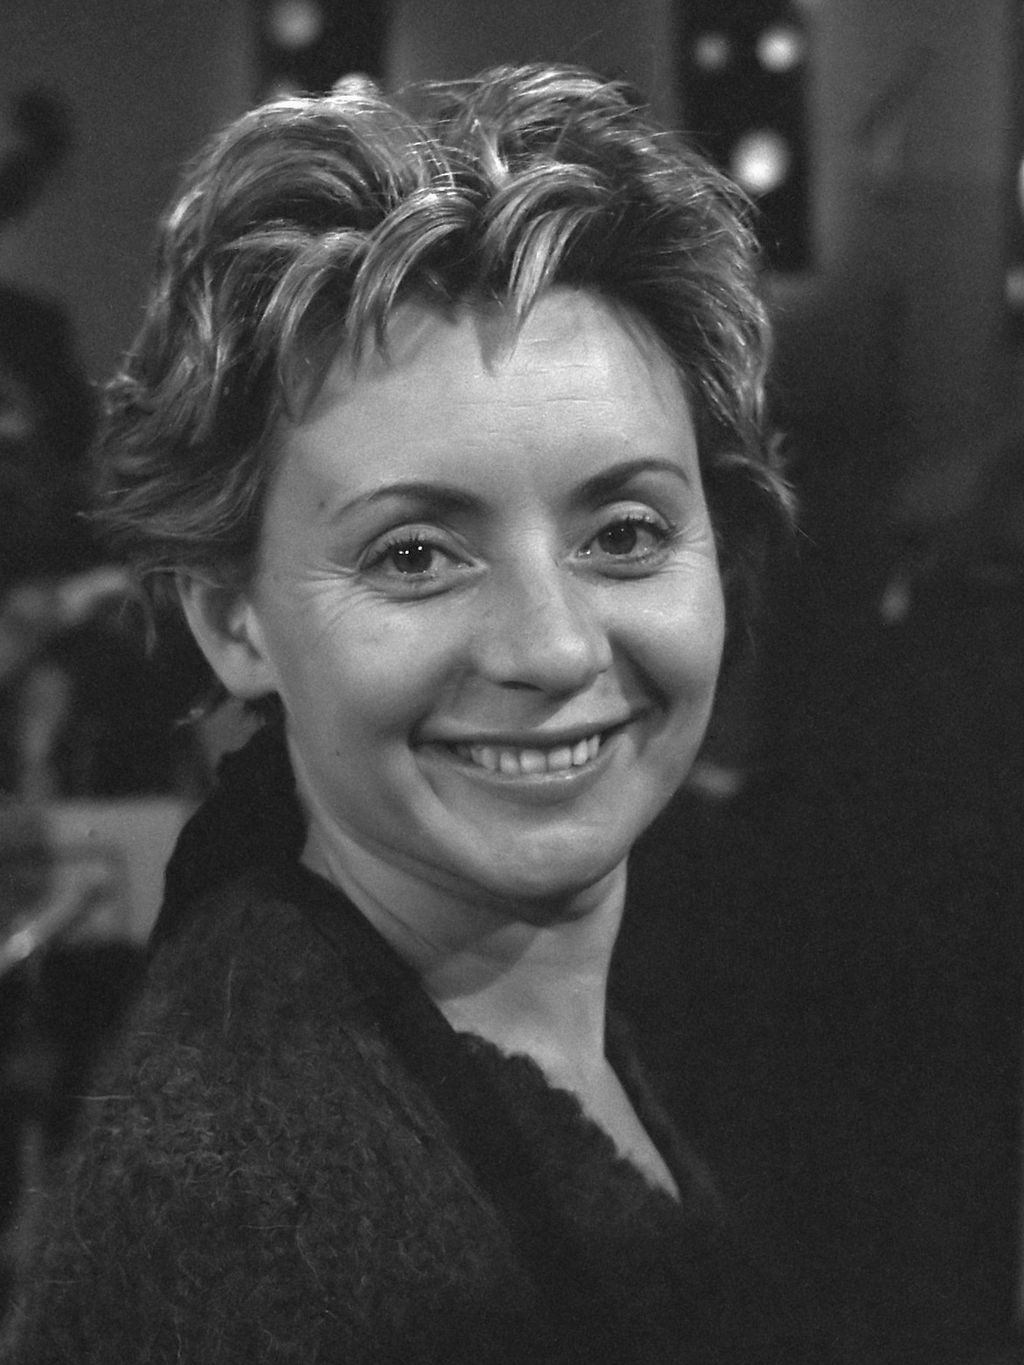 Annie Cordy, 1961 | Source: Wikimedia commons/Jac. de Nijs / Anefo [CC BY-SA 3.0]